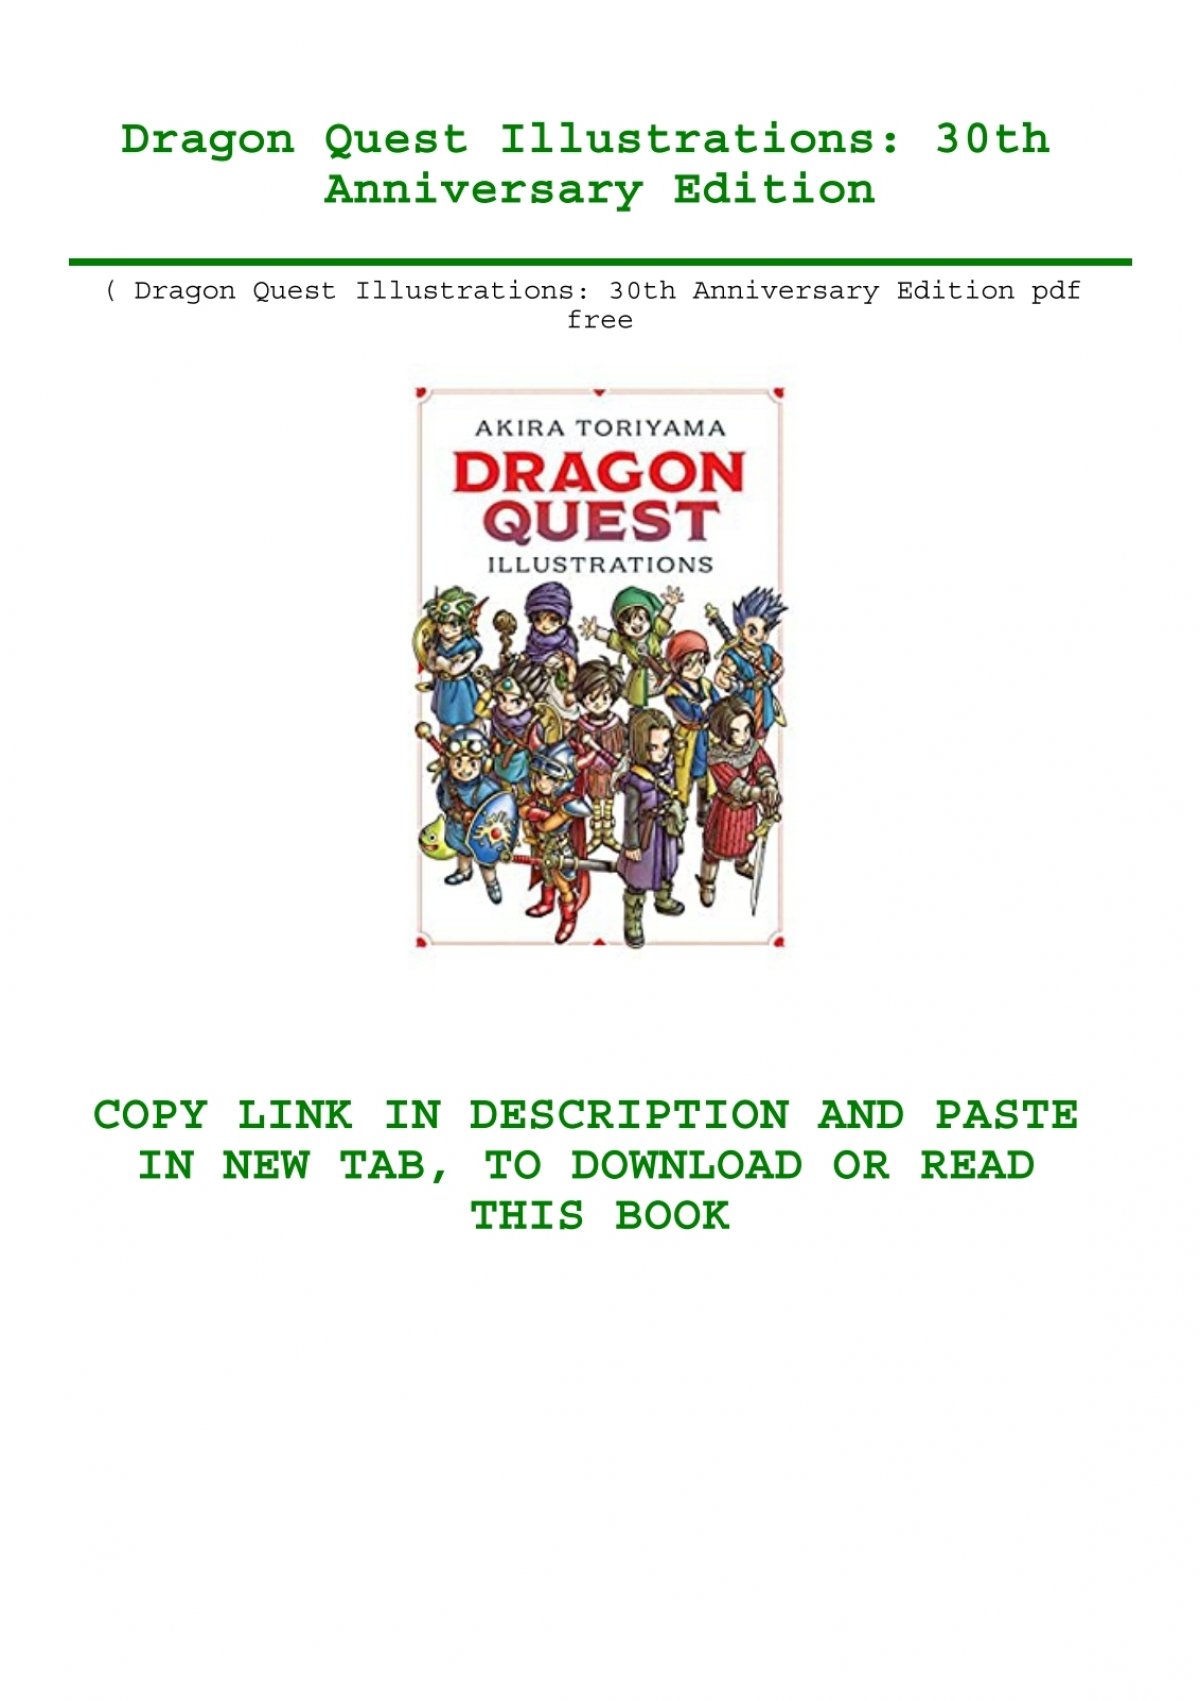 dragon quest illustrations 30th anniversary edition pdf download